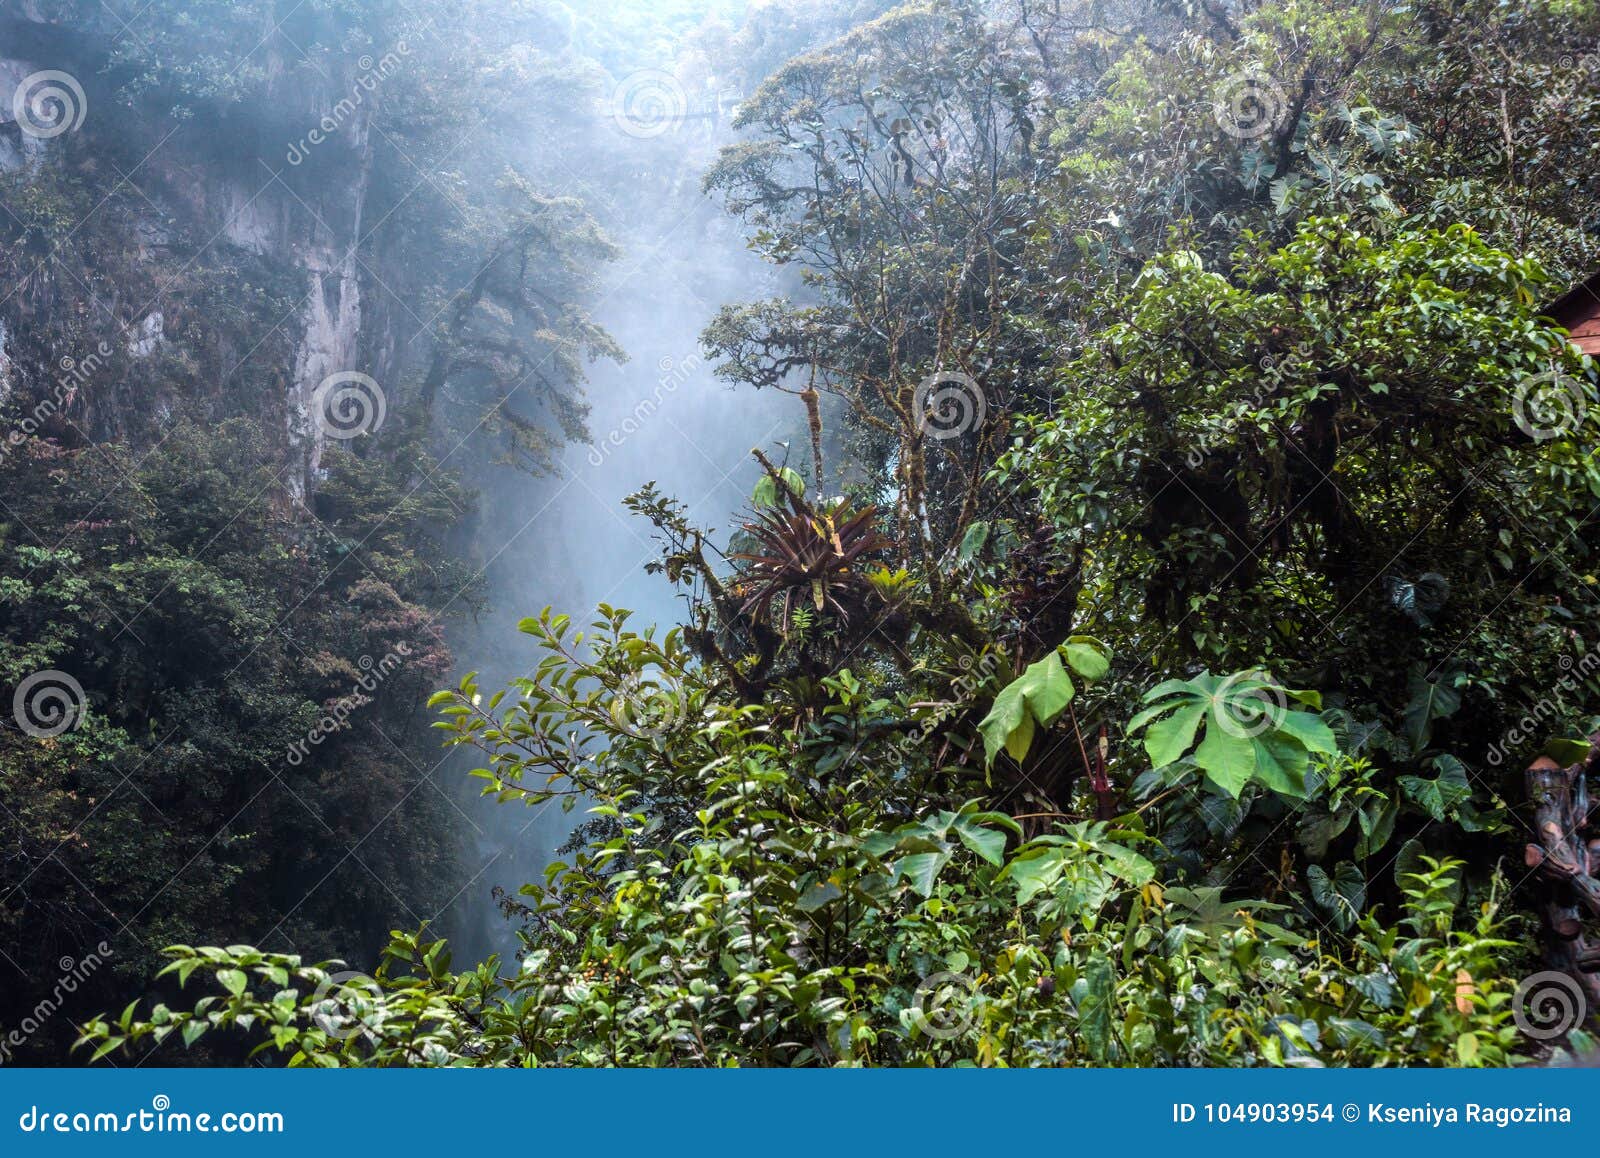 mountain rainforest, near the waterfall pailon del diablo